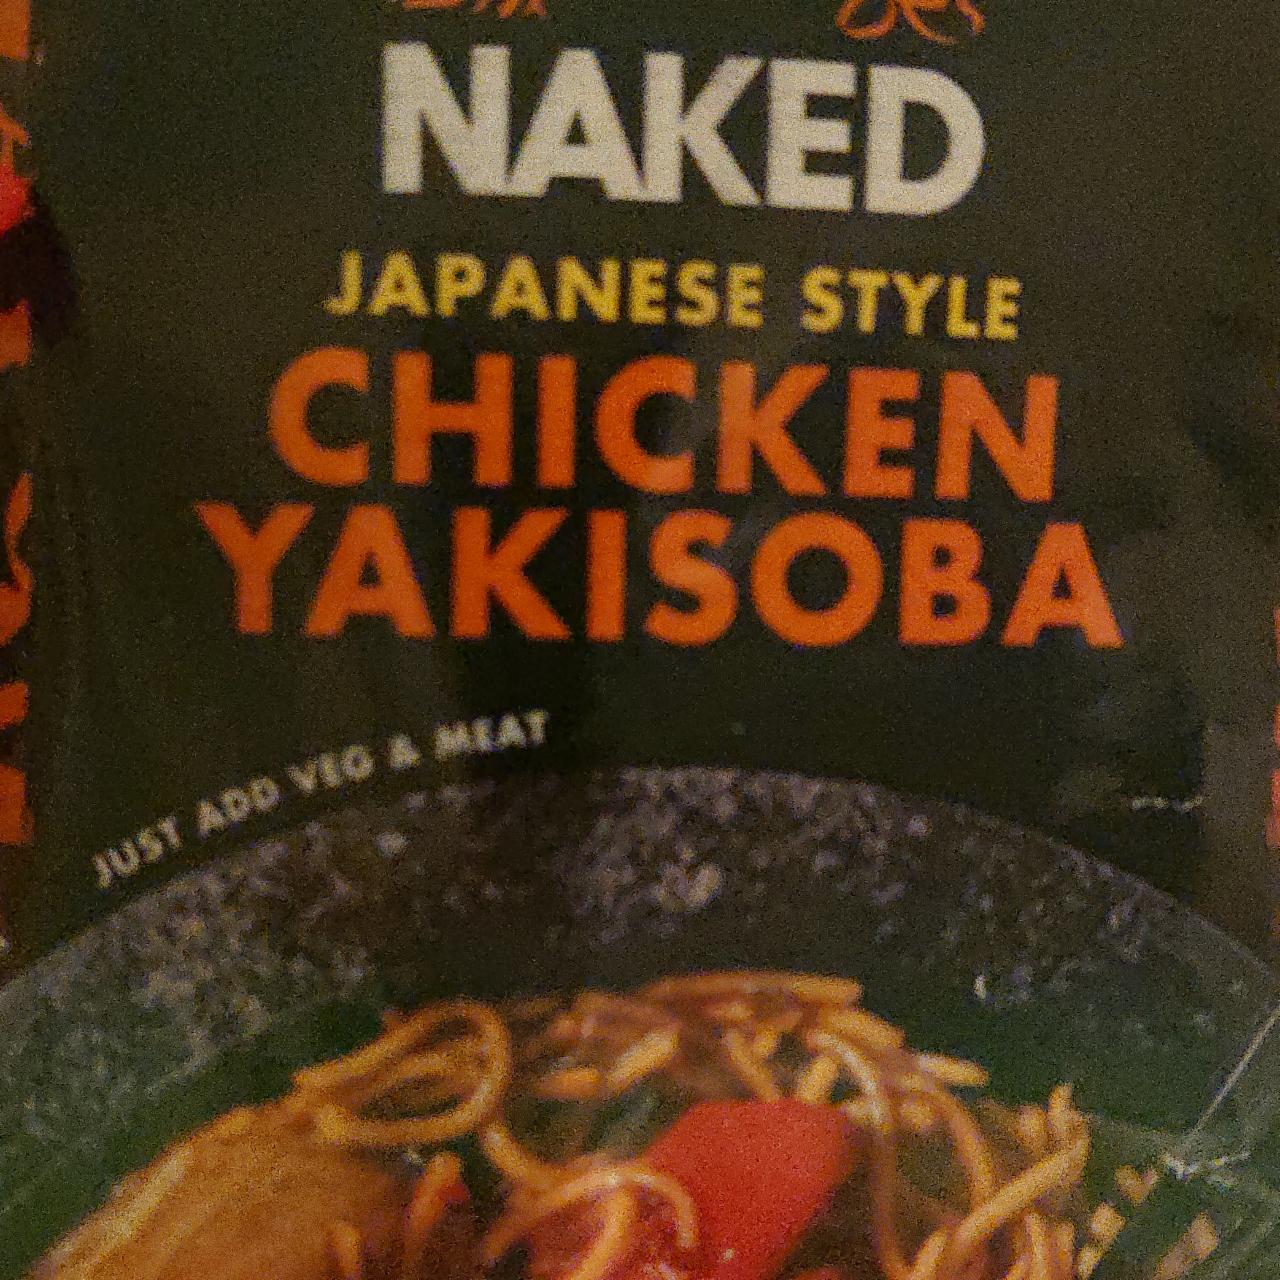 Fotografie - Japanese style chicken yakisoba Naked